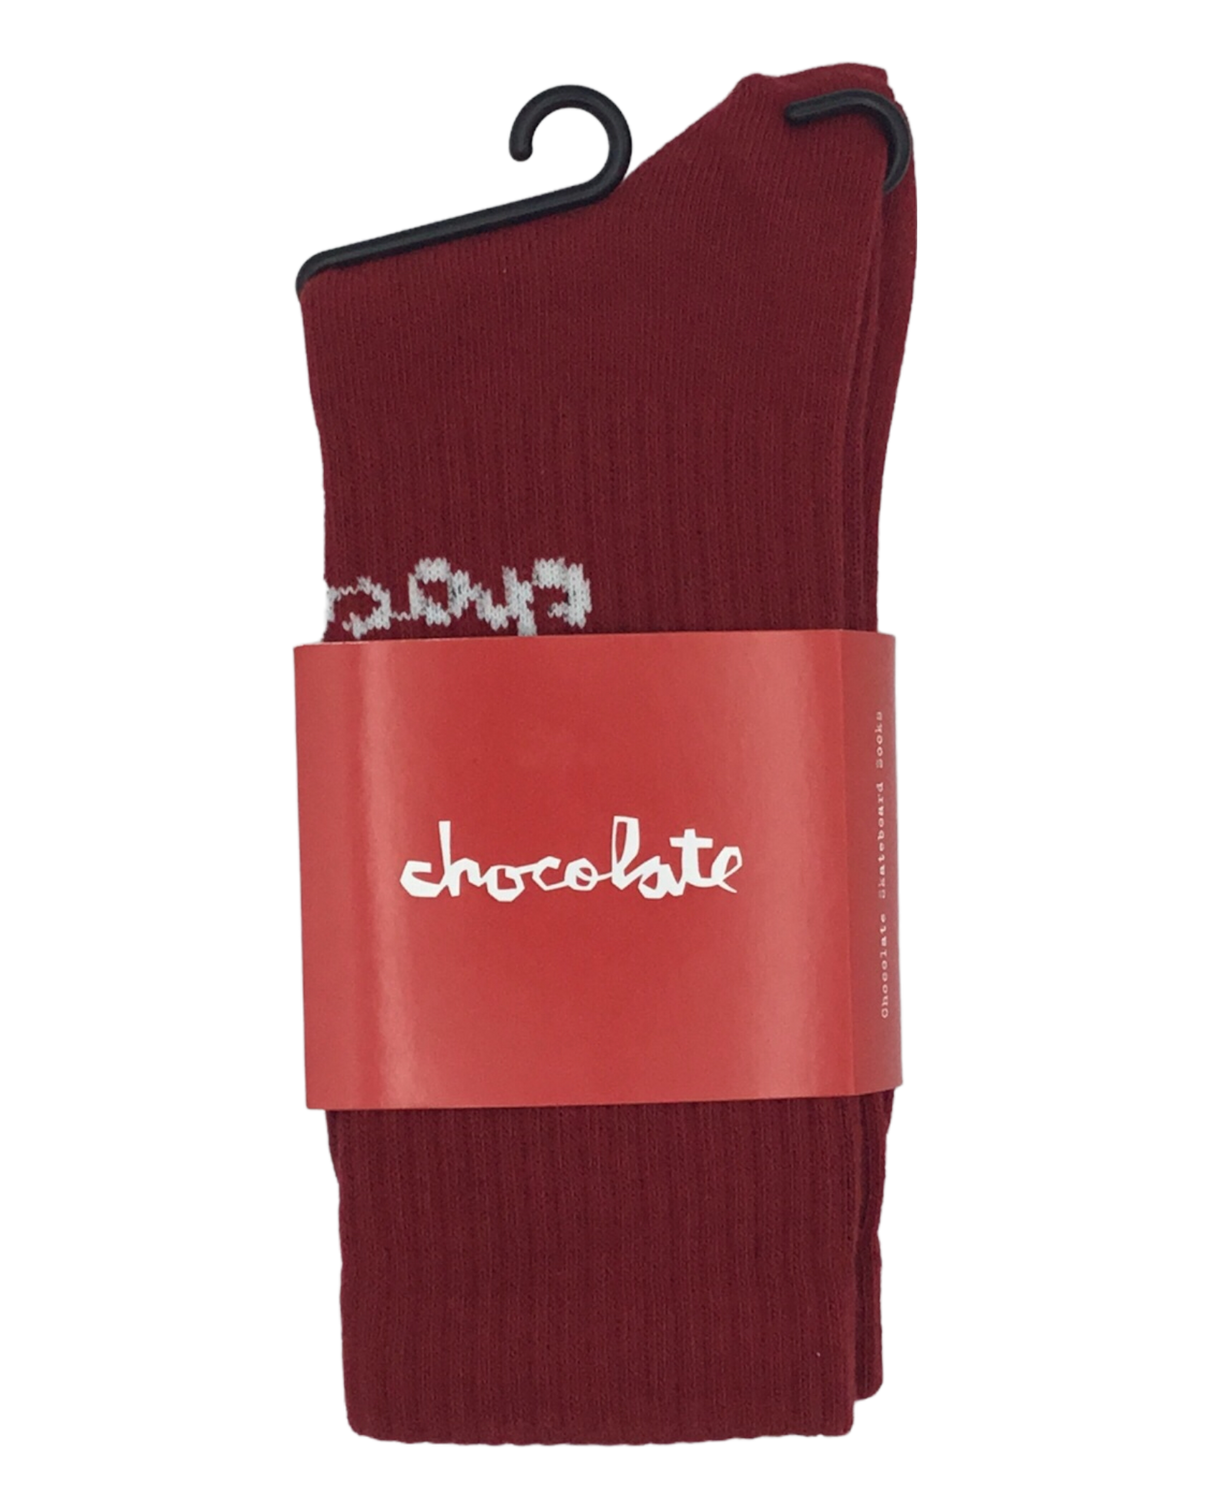 Chocolate Lost Chunk Socks - Apple Valley Emporium